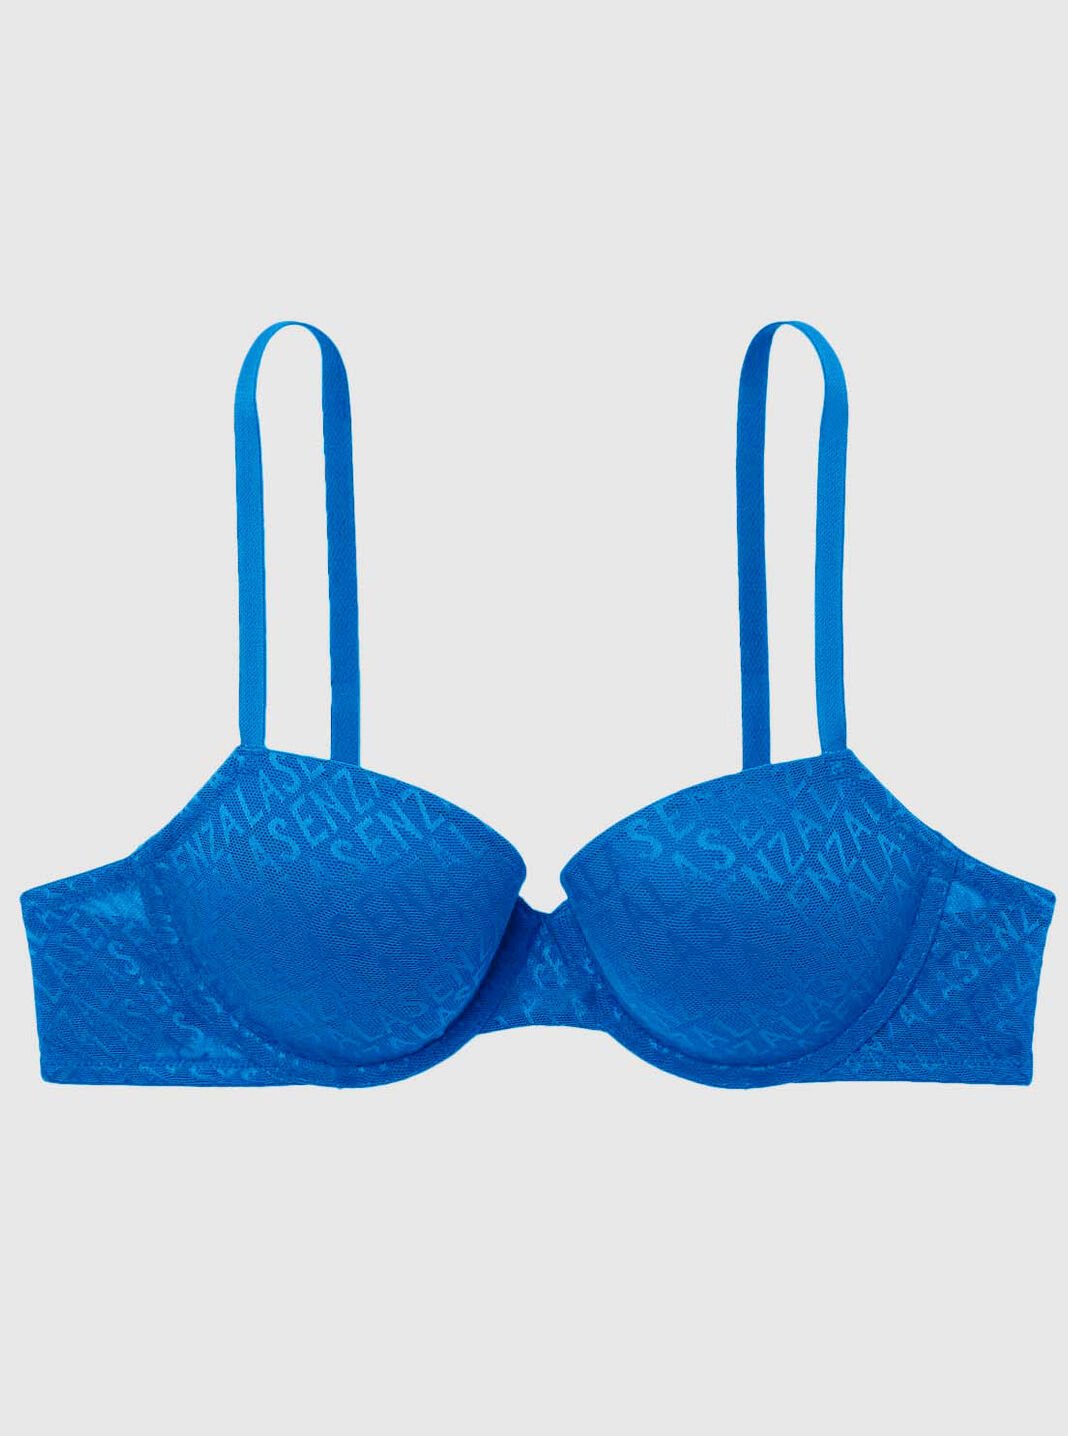 Dress Cici Blue Pushup Bra for Small Breast 2PACK, EU Bra Size 32